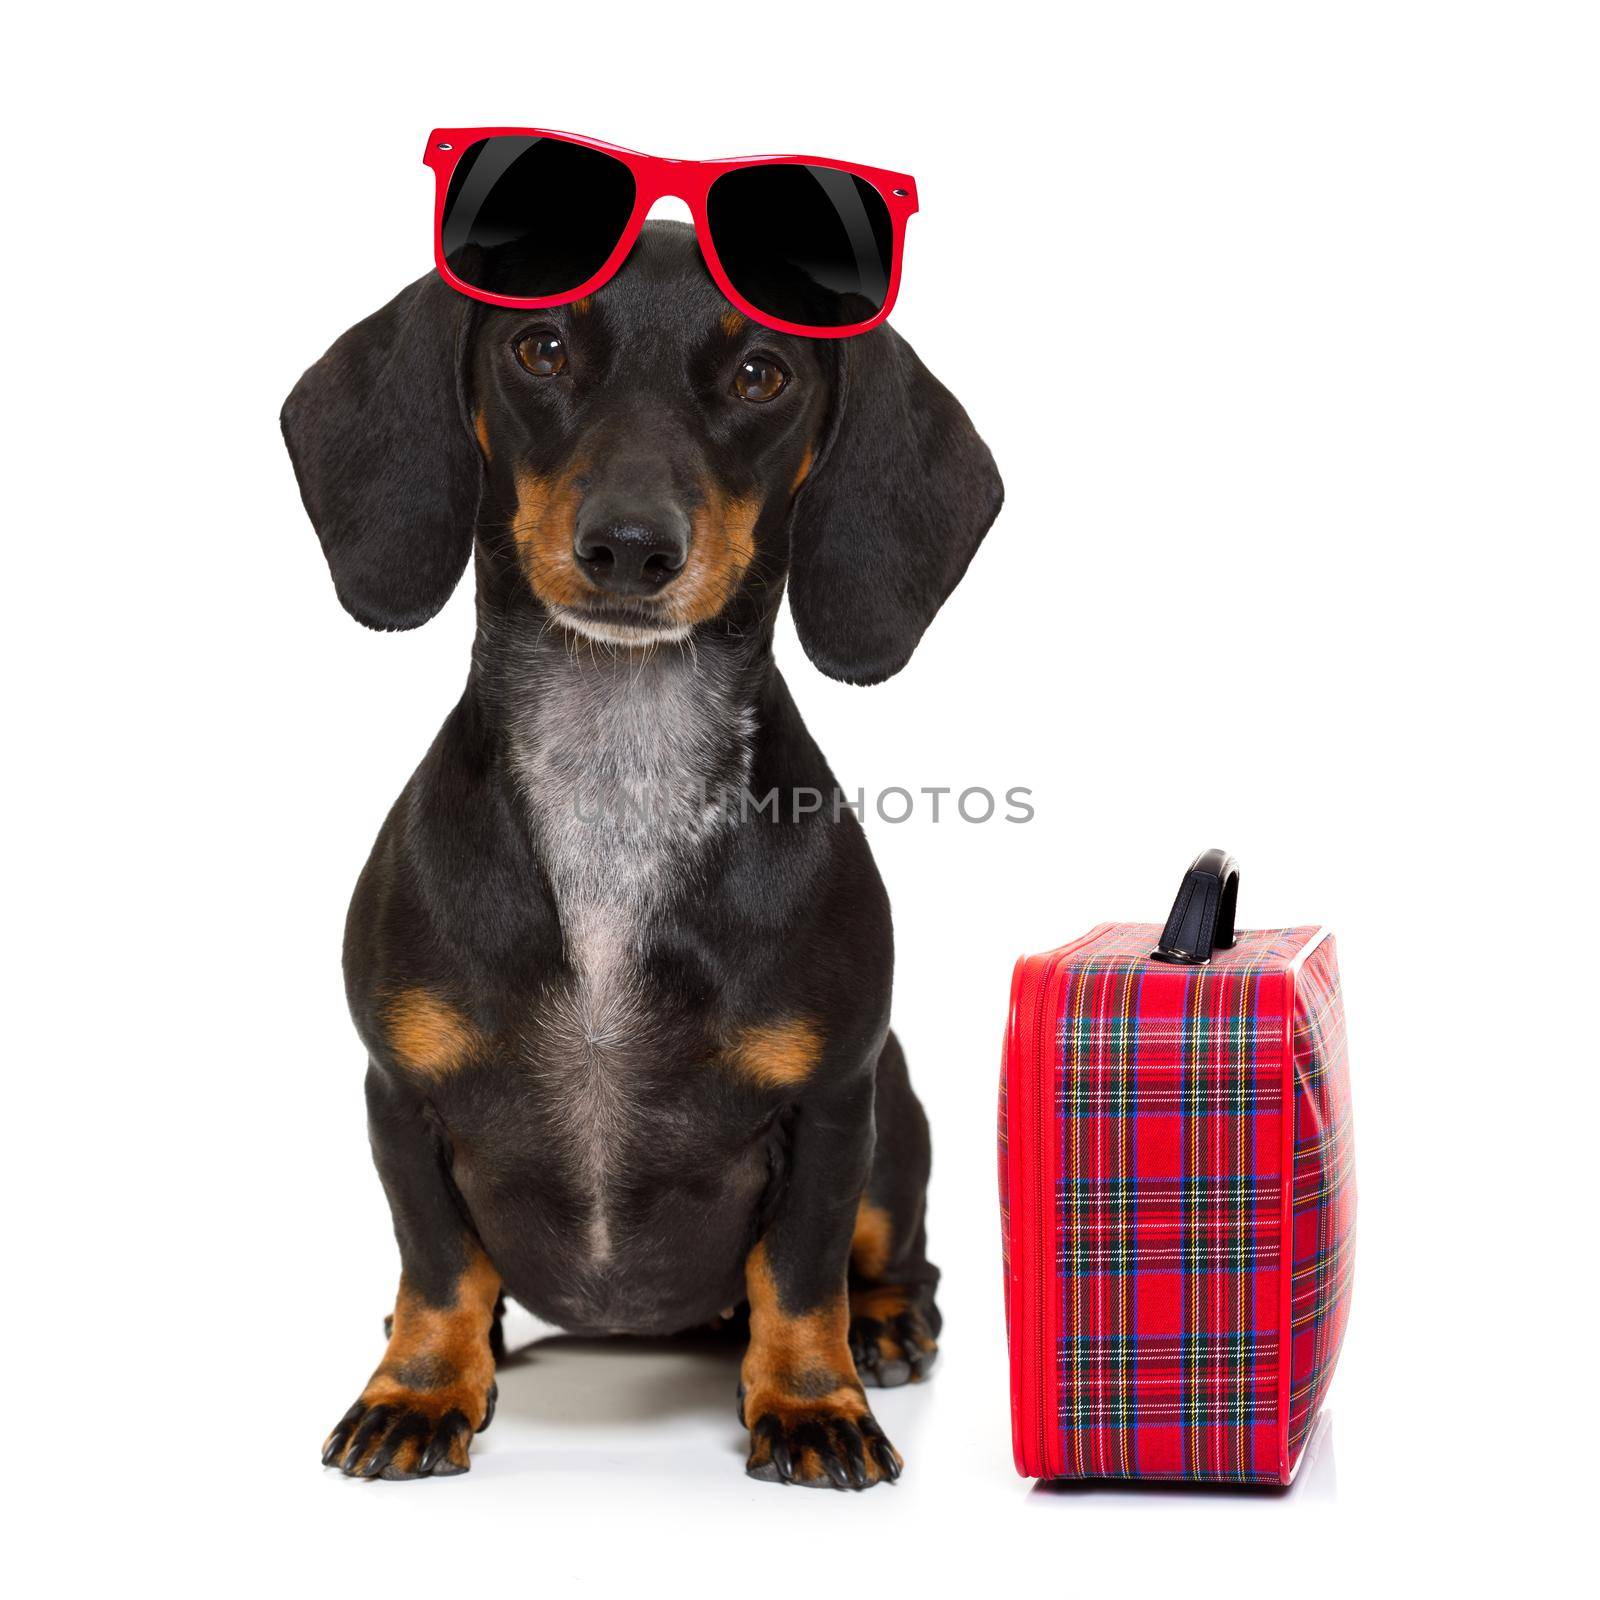 dachshund sausage dog on vacation  by Brosch